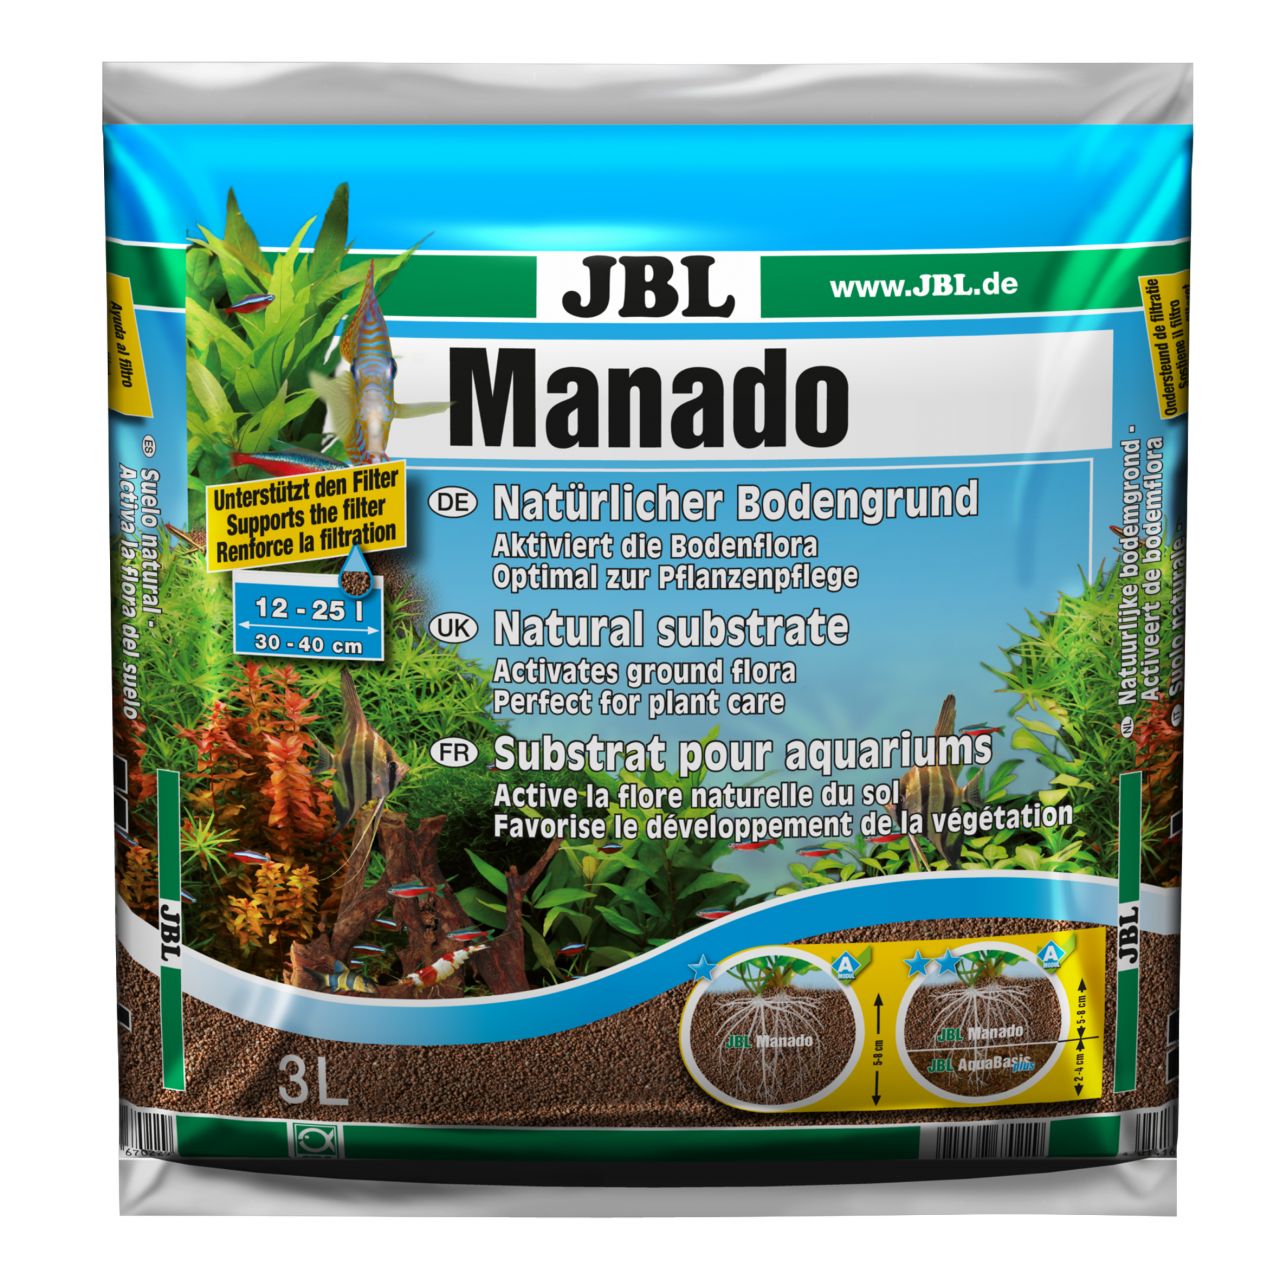 JBL Aquaristik JBL Manado Naturbodengrund GLO689502684